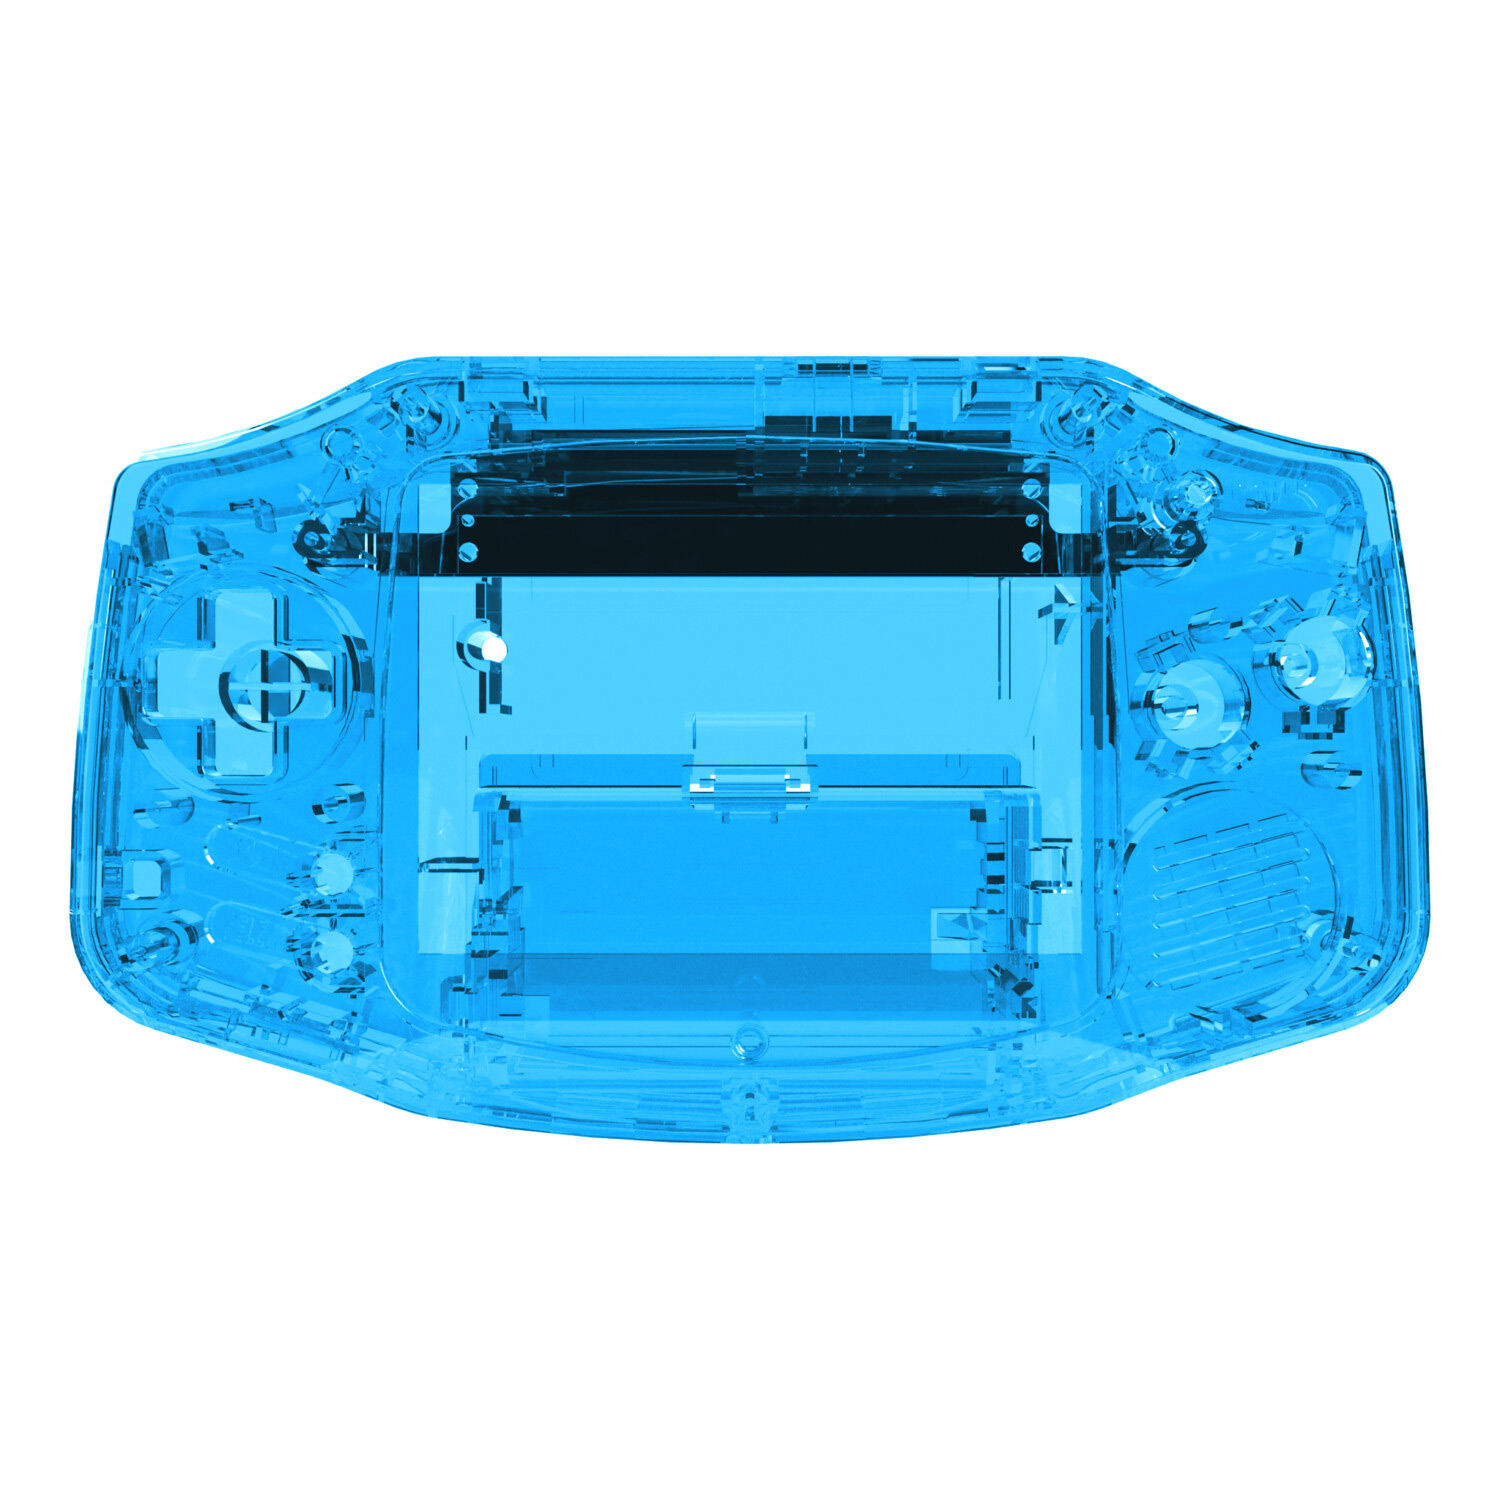 Game Boy Advance Gehäuse (Crystal Blue)